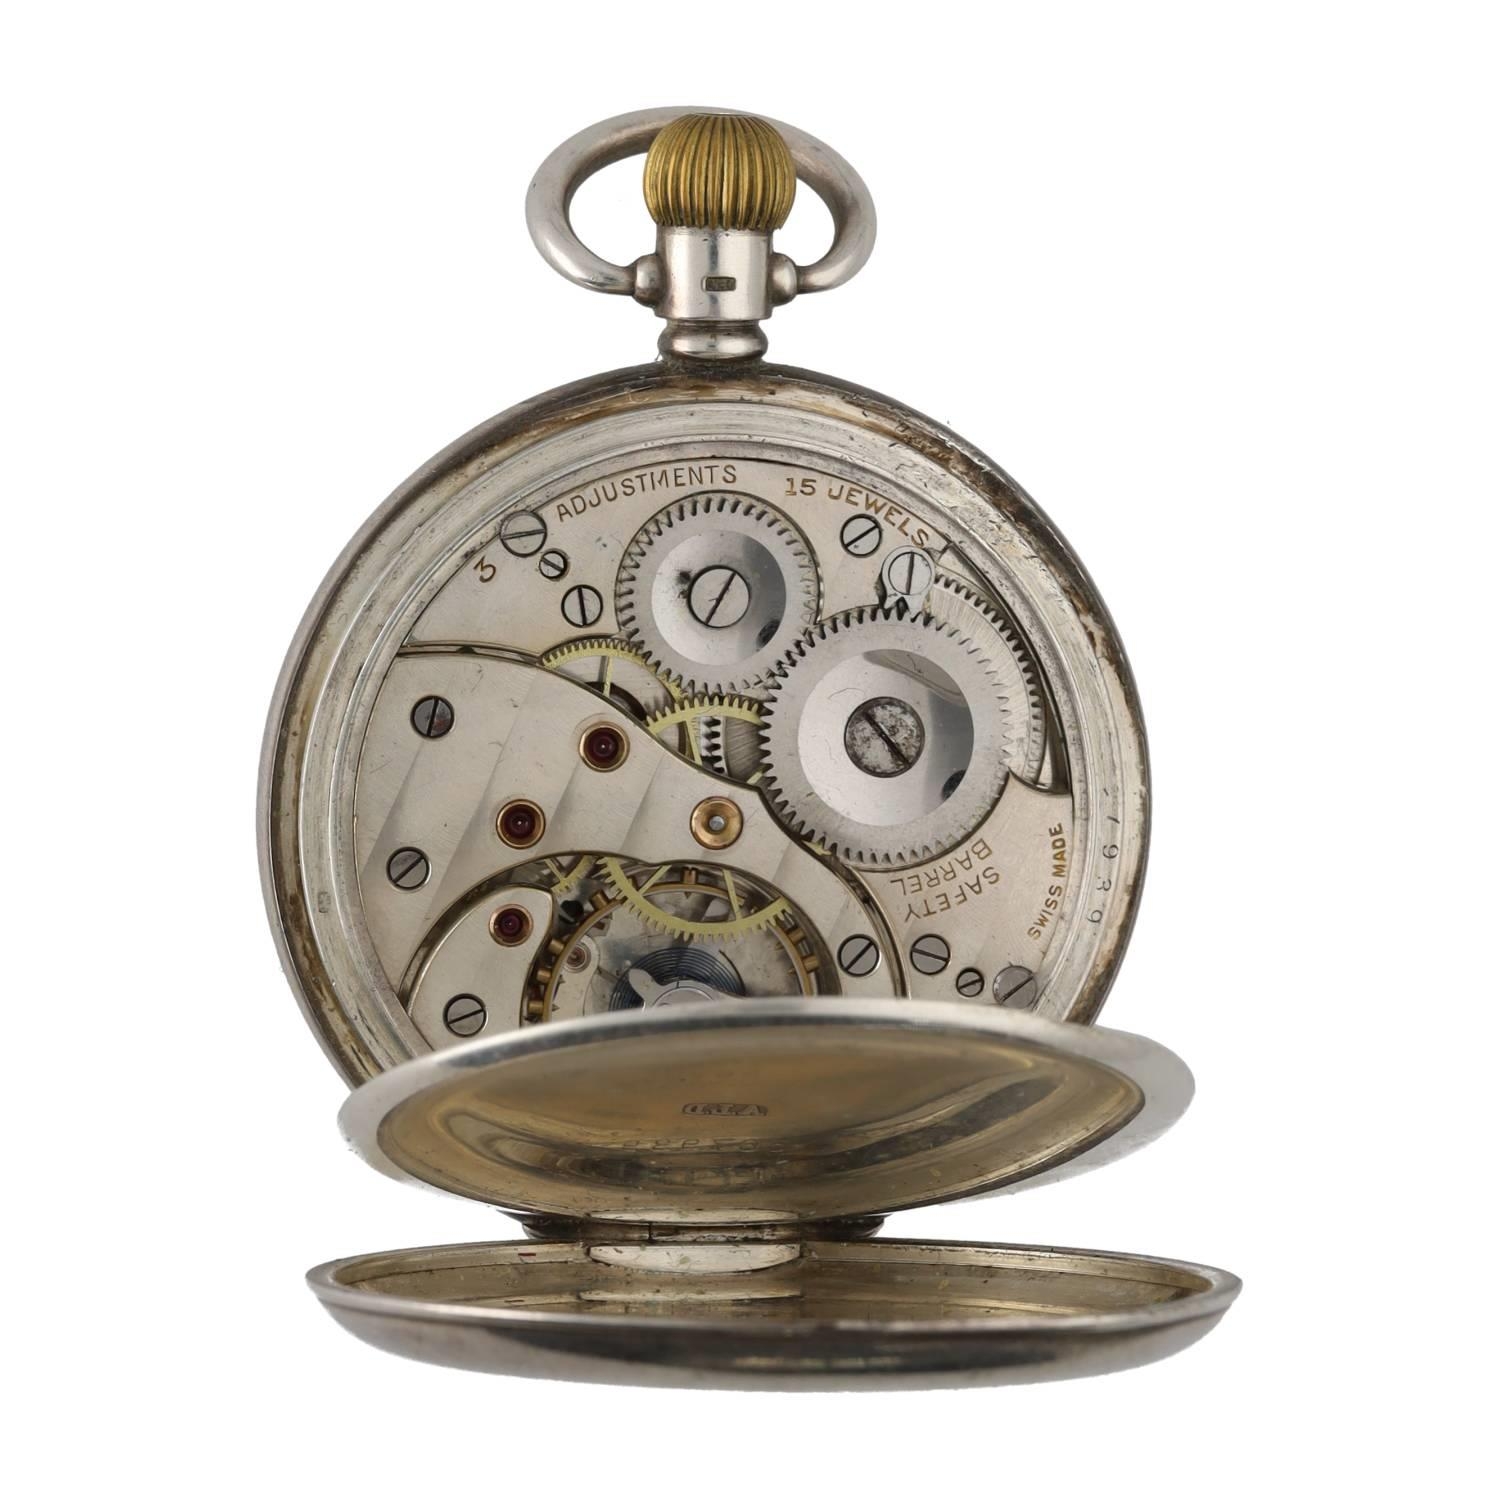 Swiss silver lever half hunter pocket watch, Birmingham 1928, 15 jewel 3 adjustments movement with - Image 3 of 4